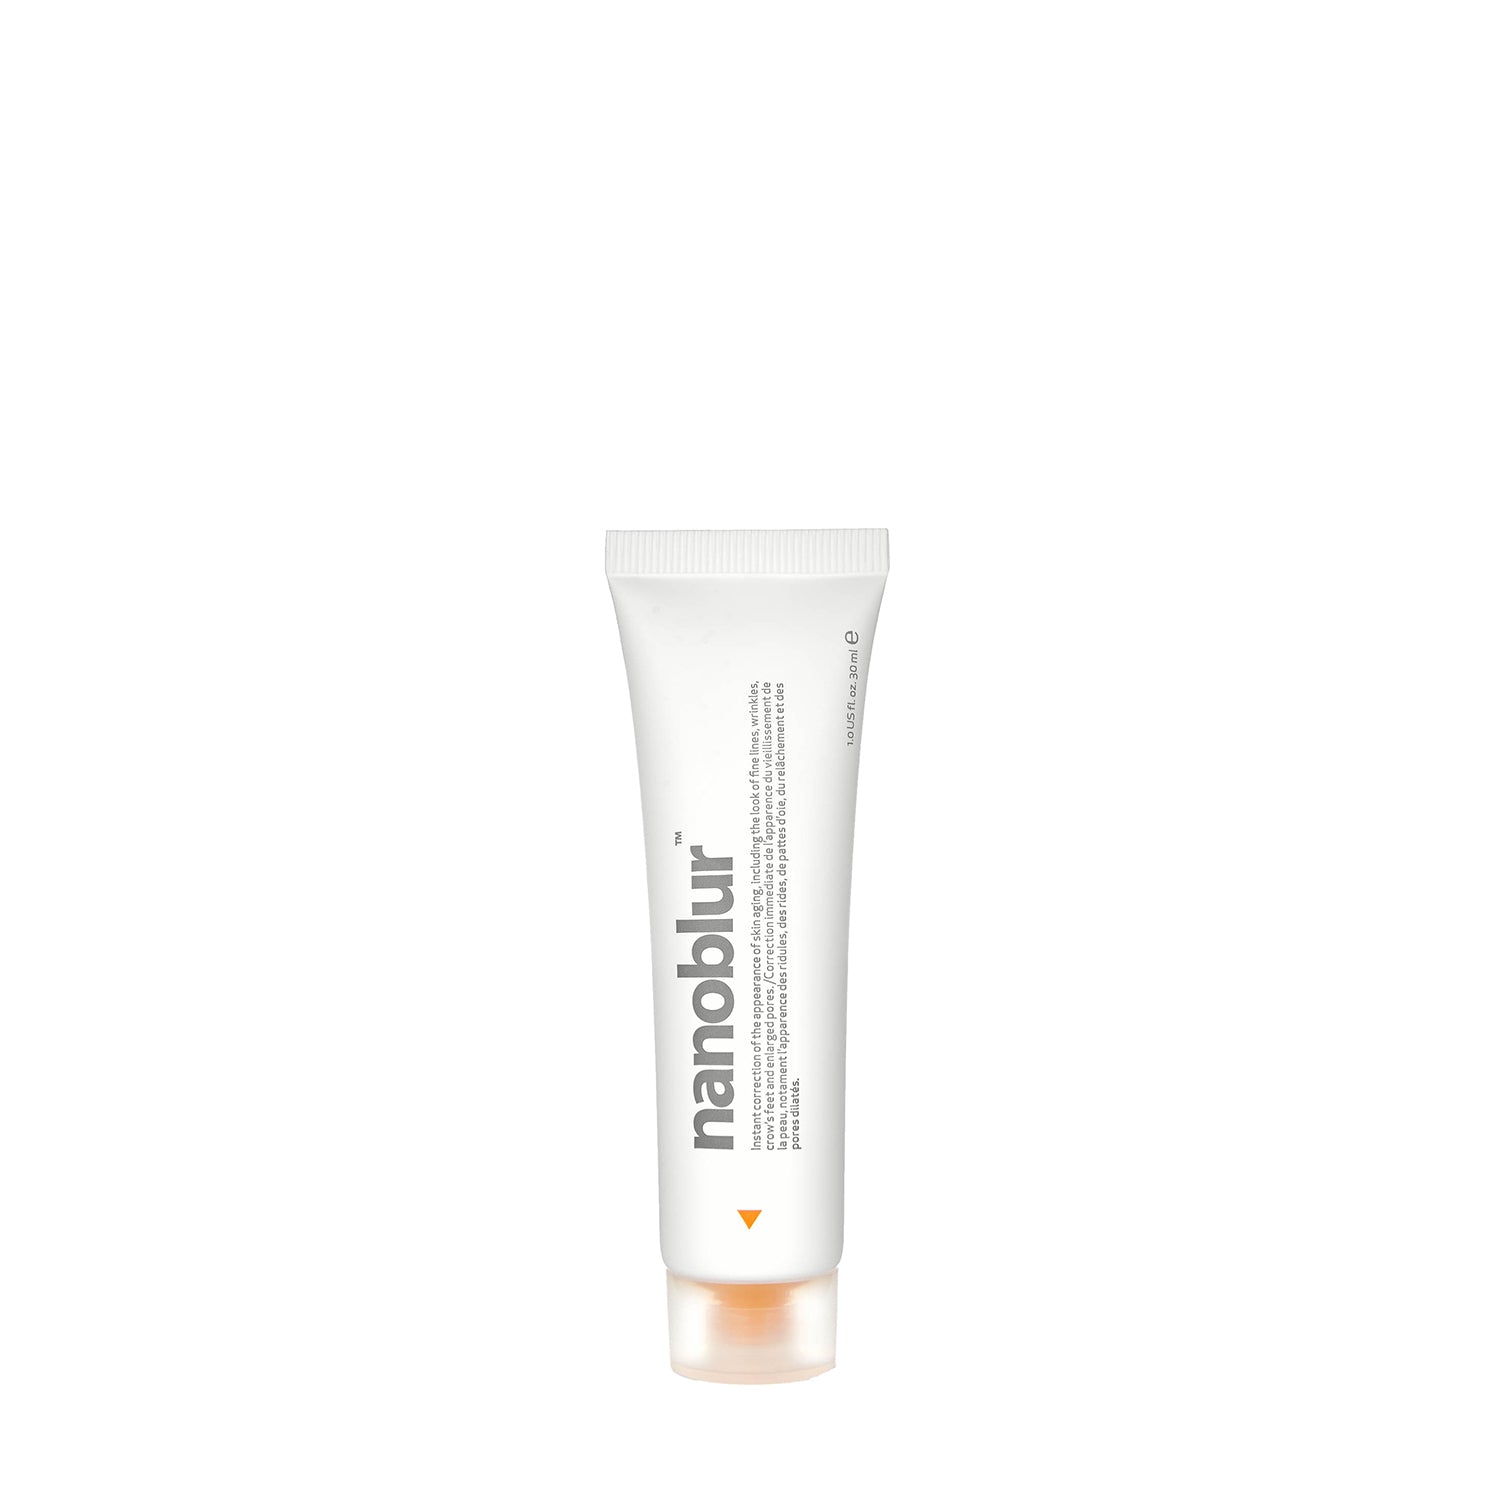 Nanoblur instant skin blurring cream